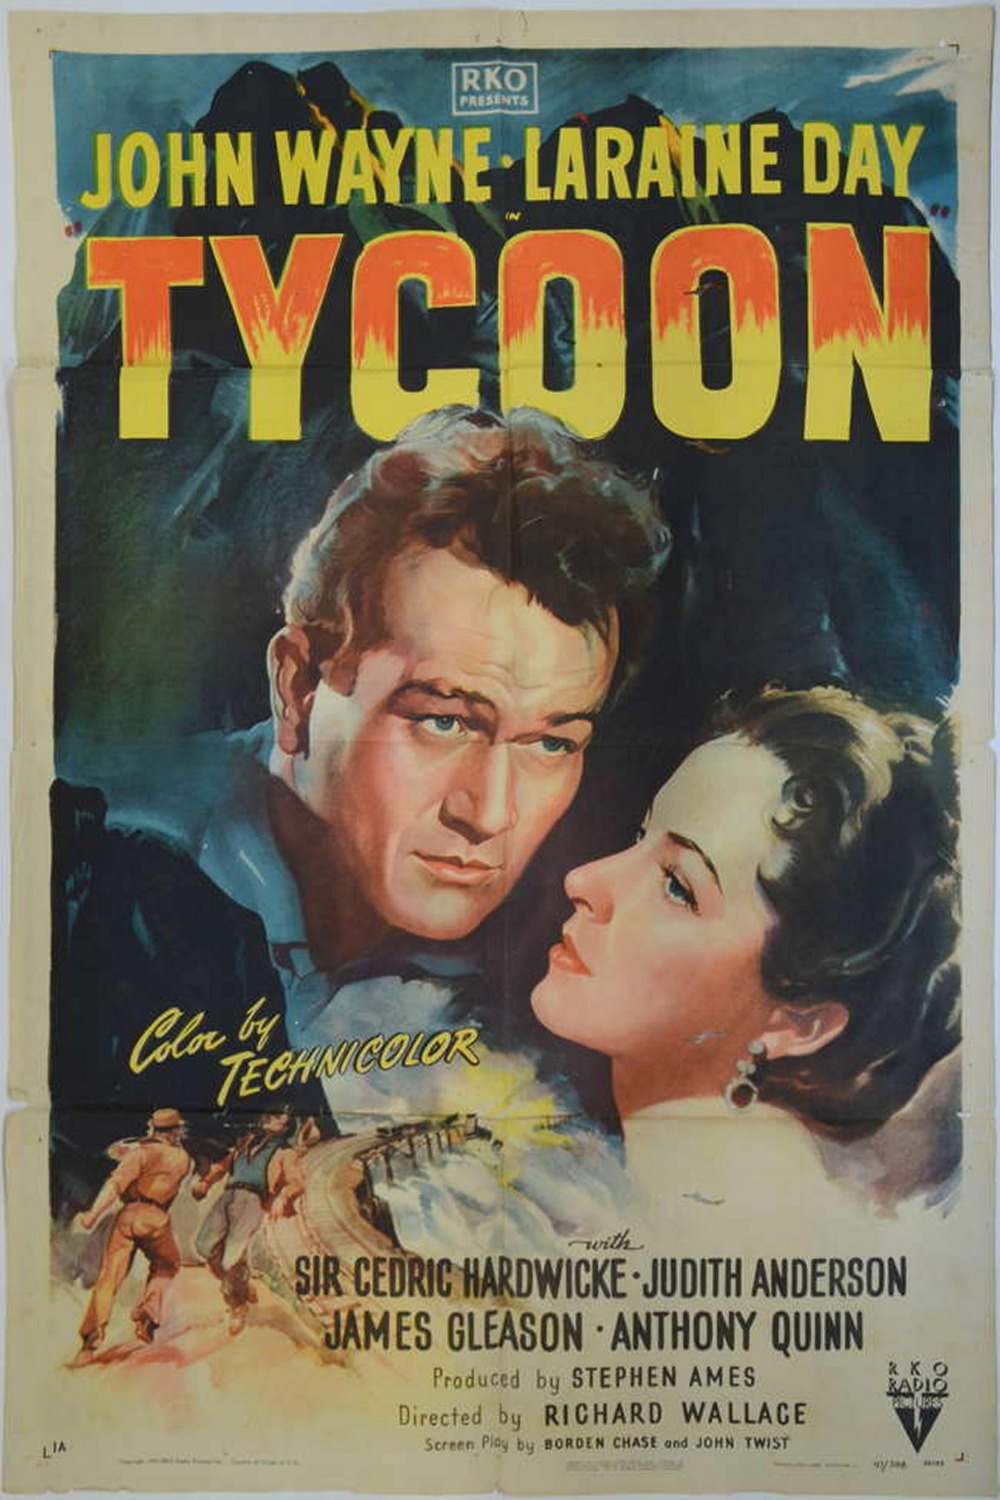 Tycoon (1947) One Sheet film poster, starring Johnny Munroe (John Wayne), this was RKO's most